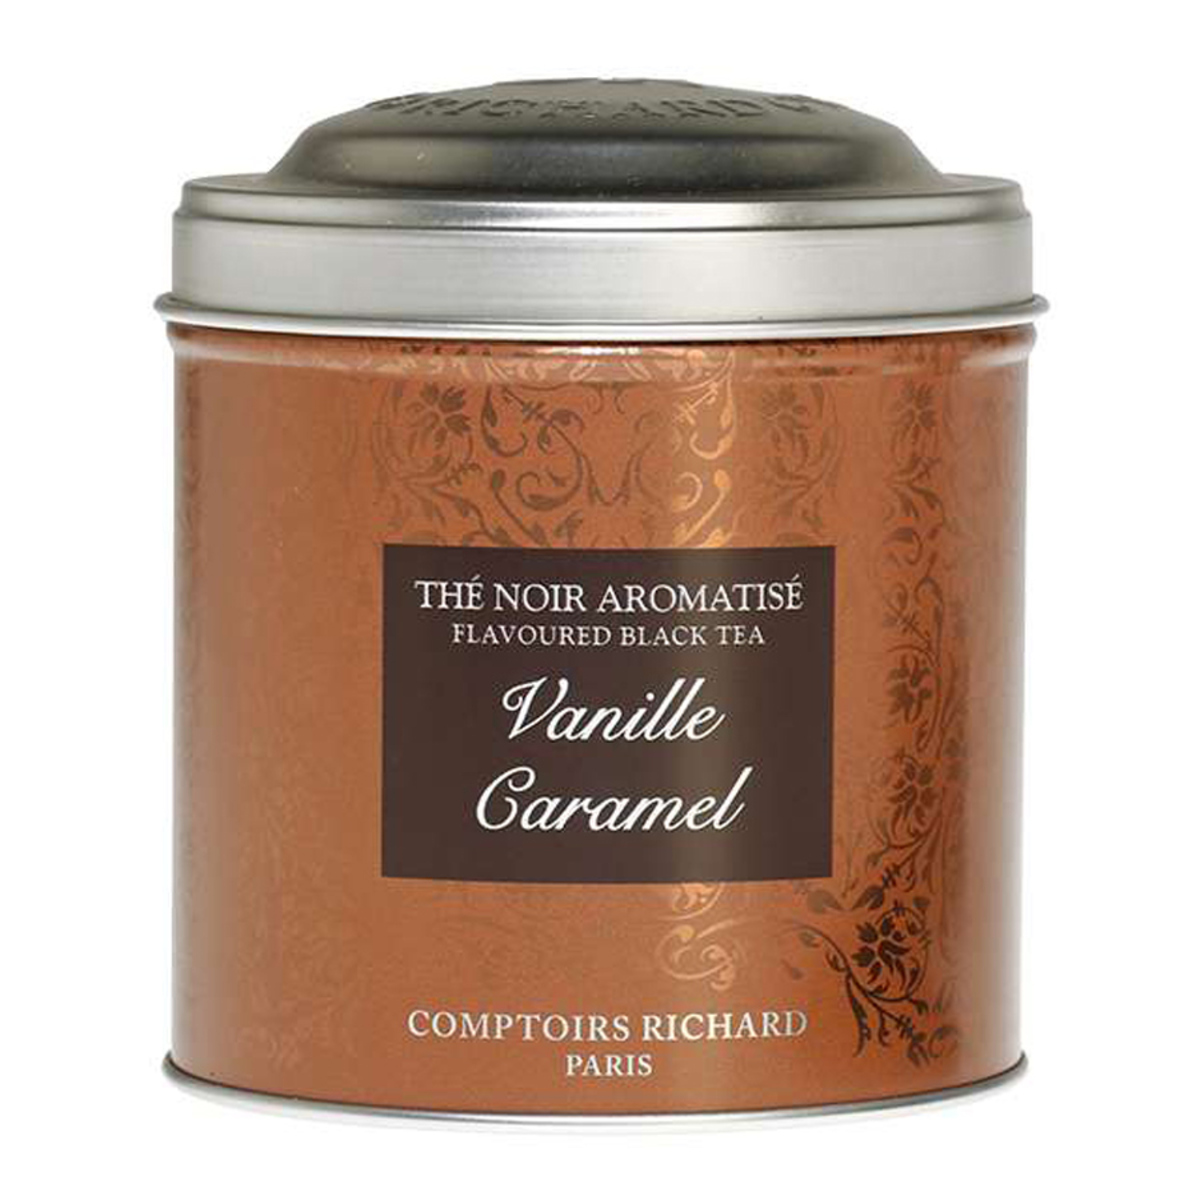 Thé noir aromatisé Vanille caramel boîte métal vrac 100g